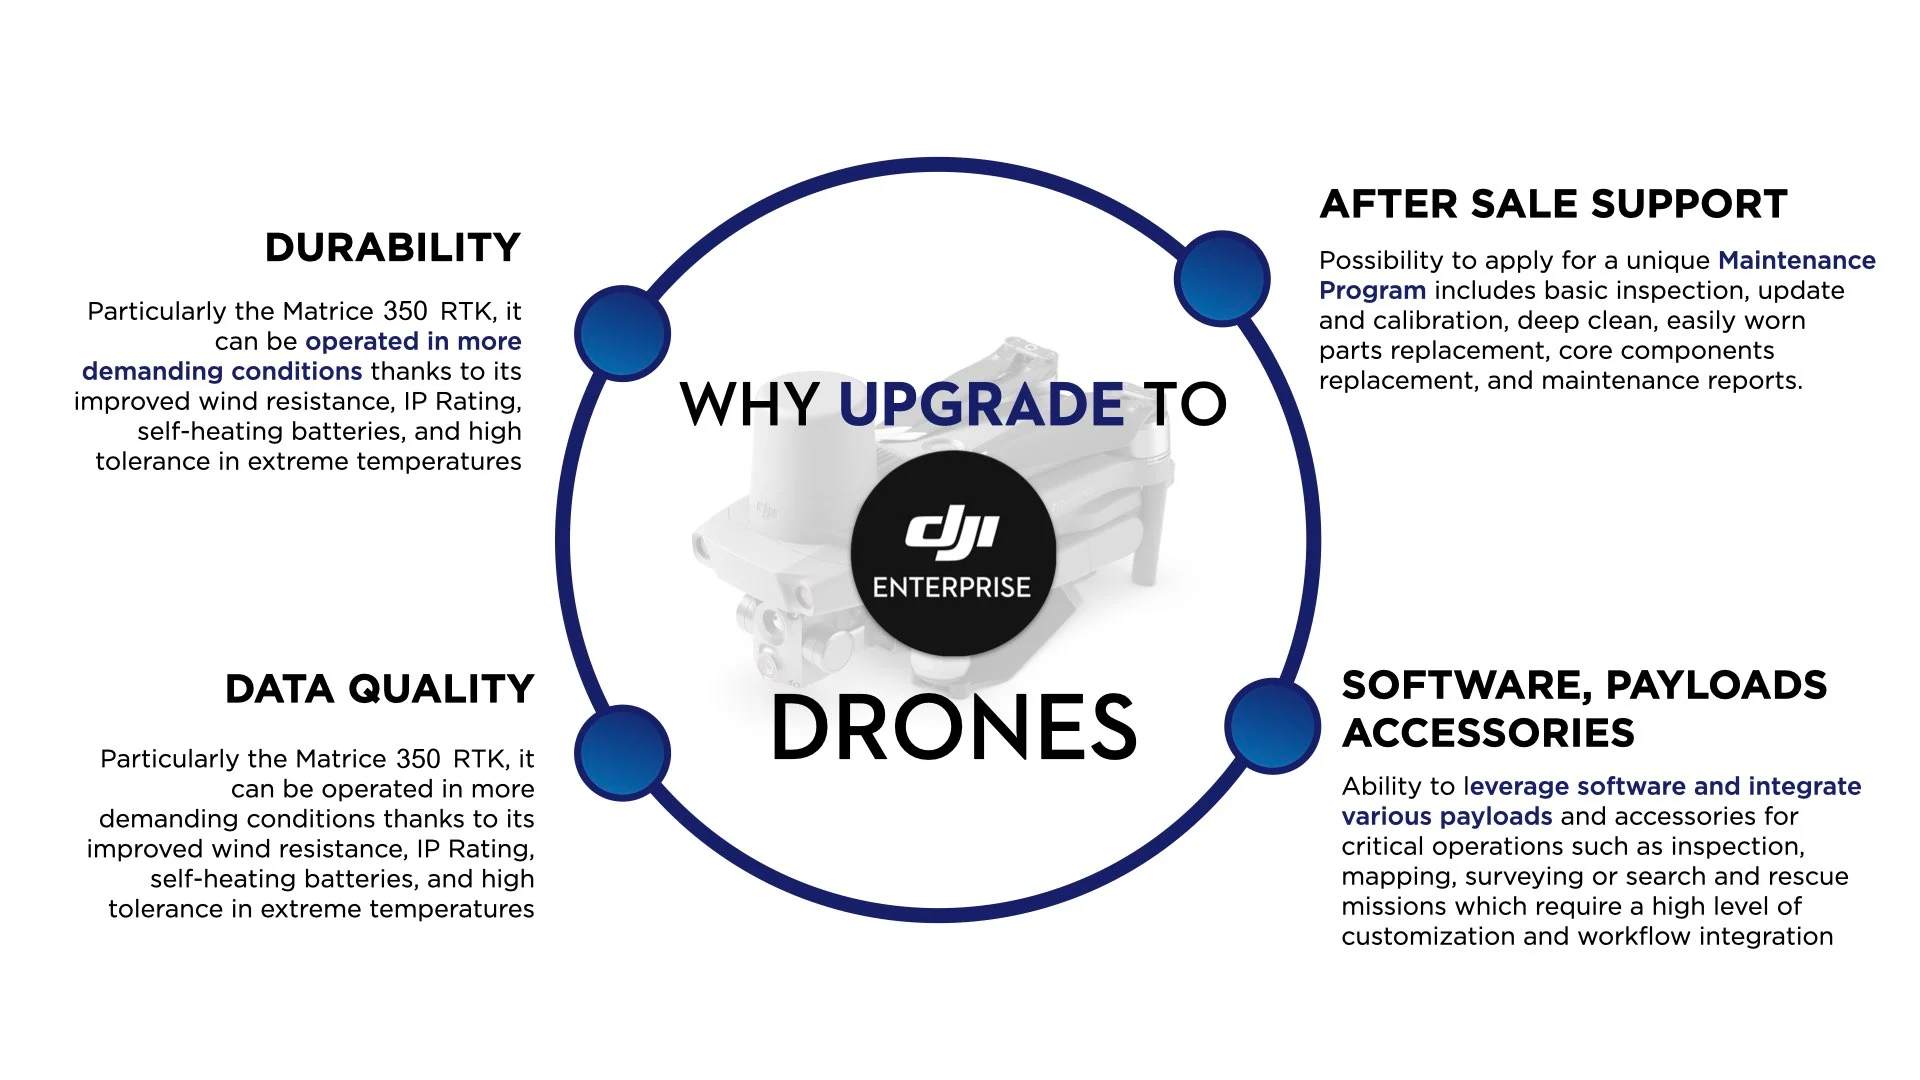 Why Upgrade to DJI Enterprise Drones